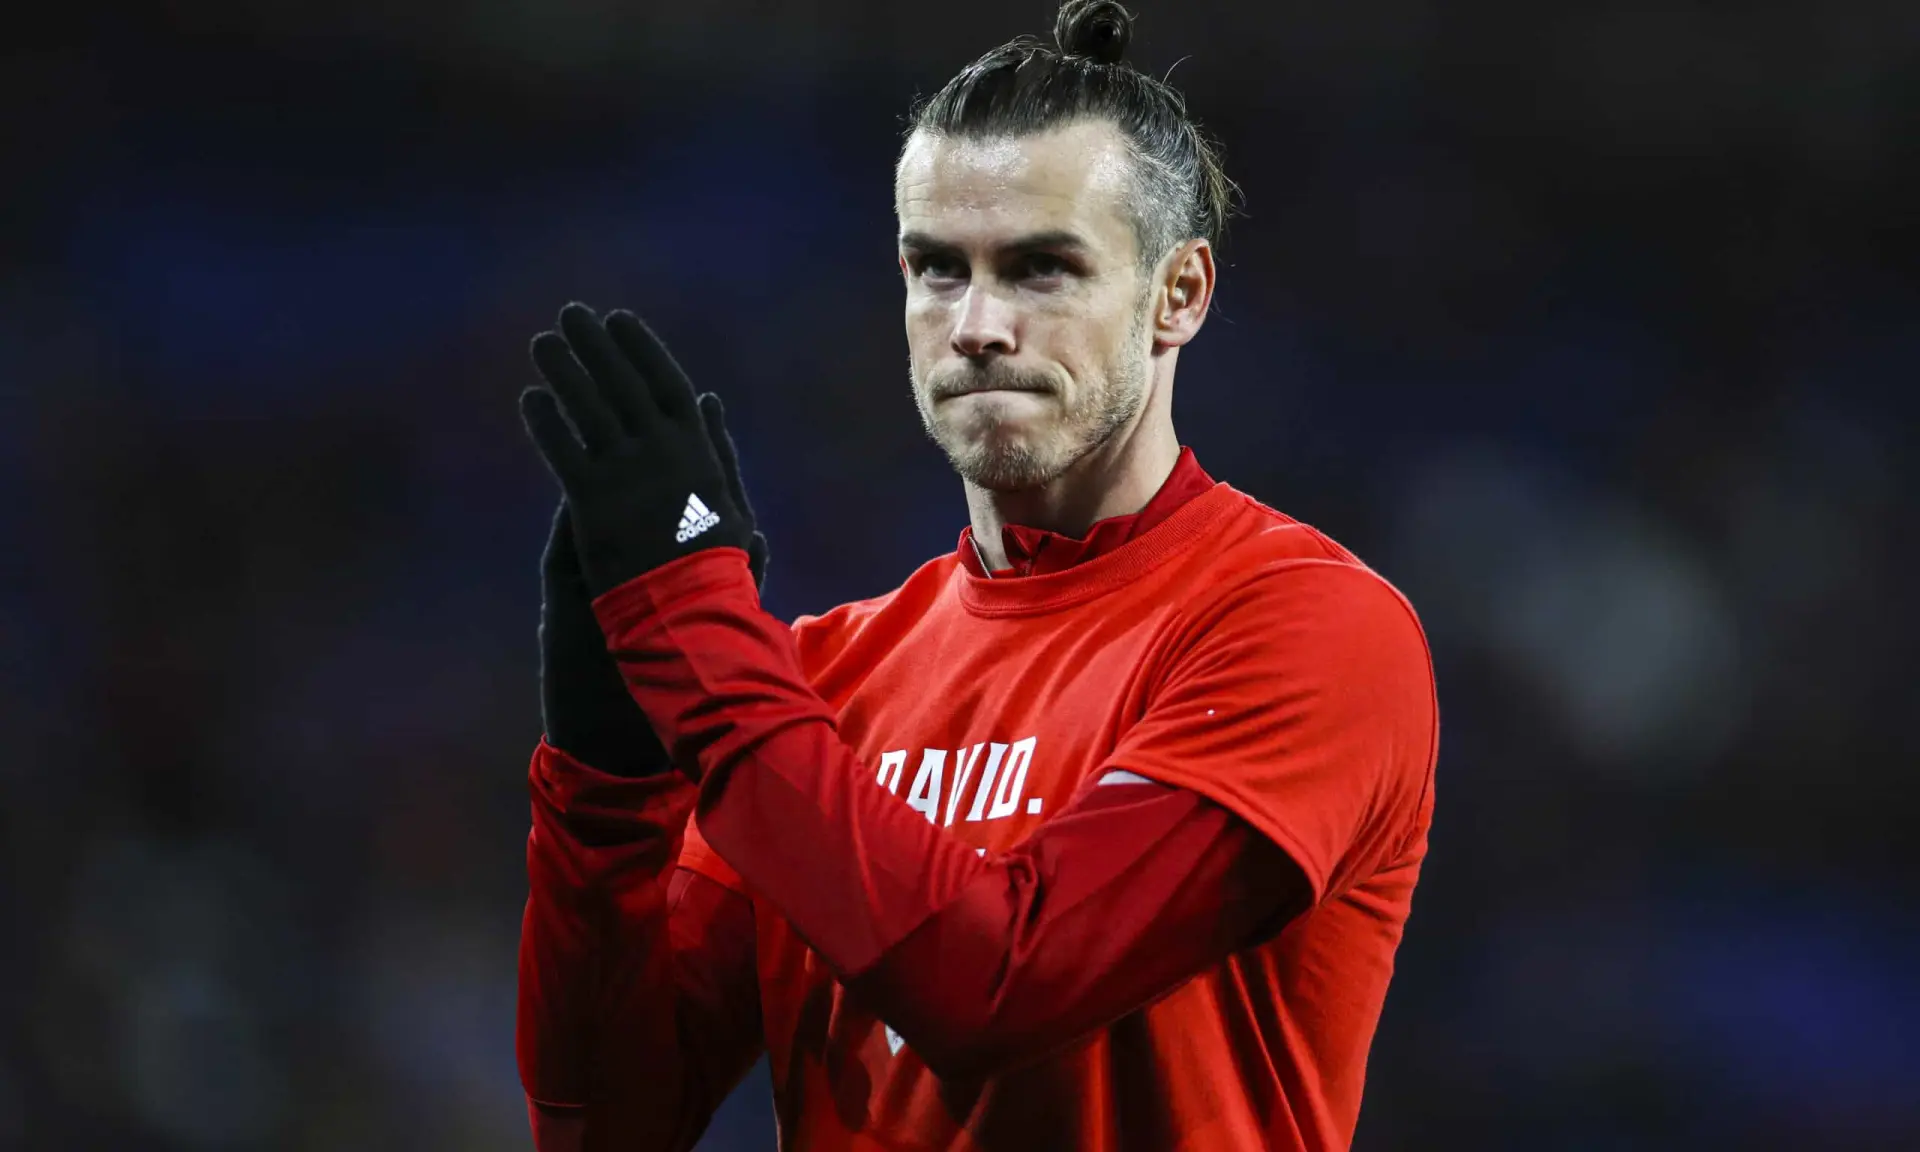 Gareth Bale, Wales v Belgium betting tips